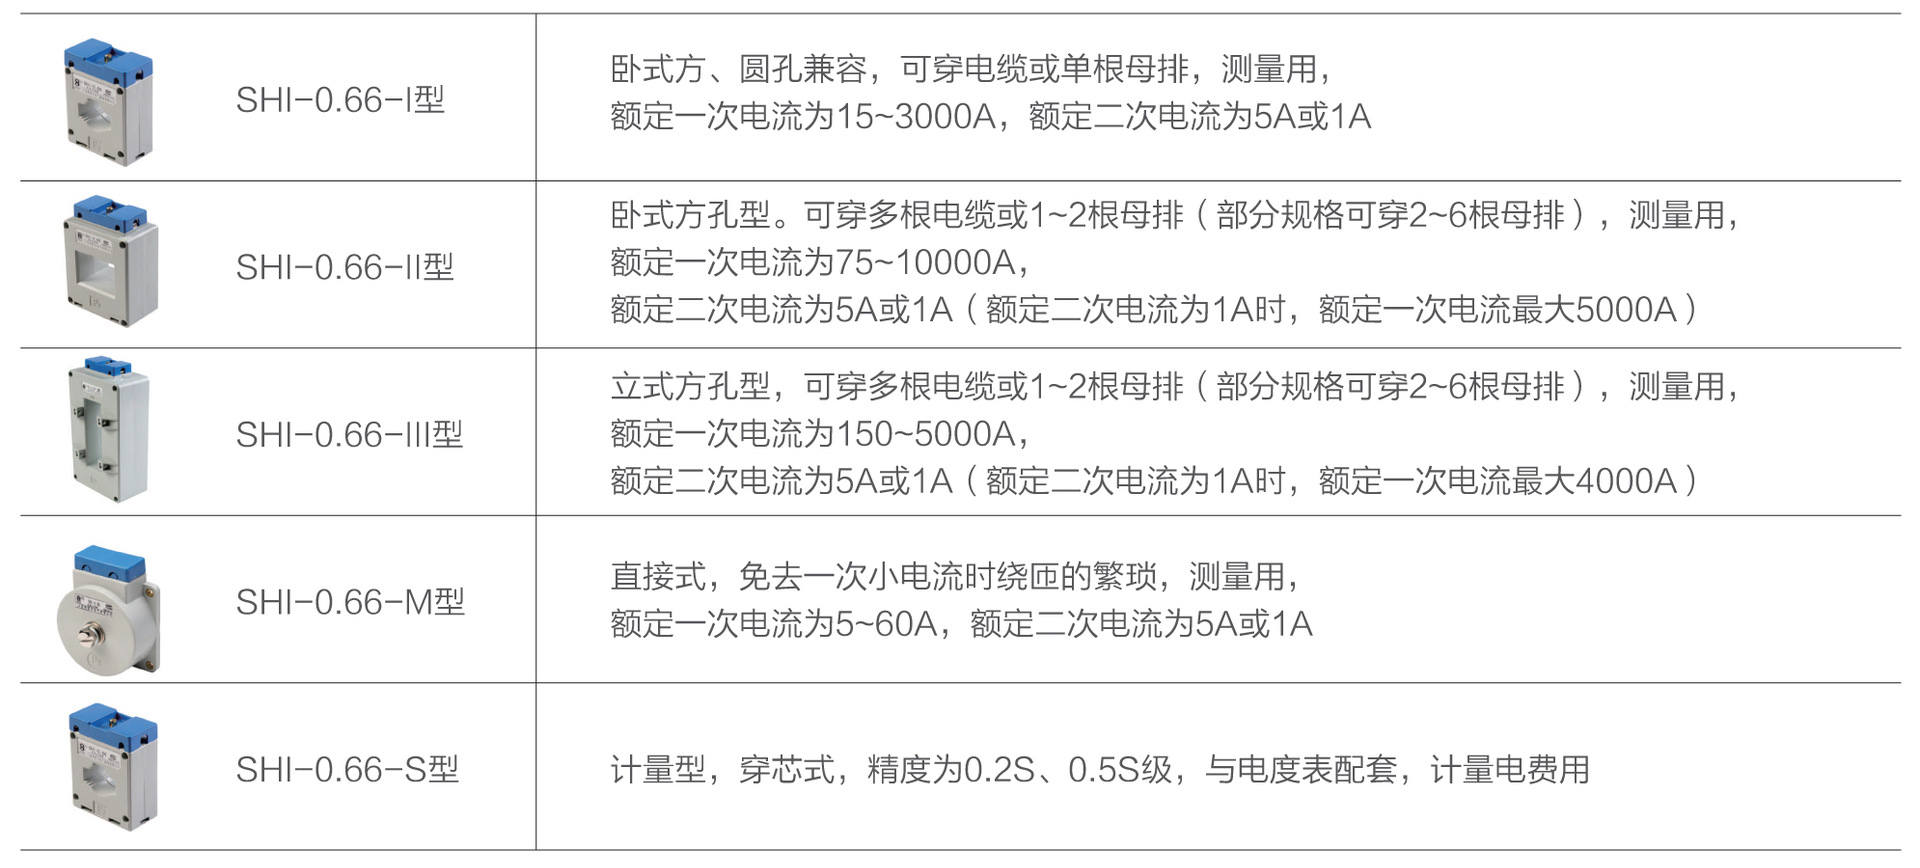 SHI-066-20I精度等级1级电流互感器江苏斯菲尔厂家直销 电流互感器,江苏斯菲尔厂家直销,SHI-066